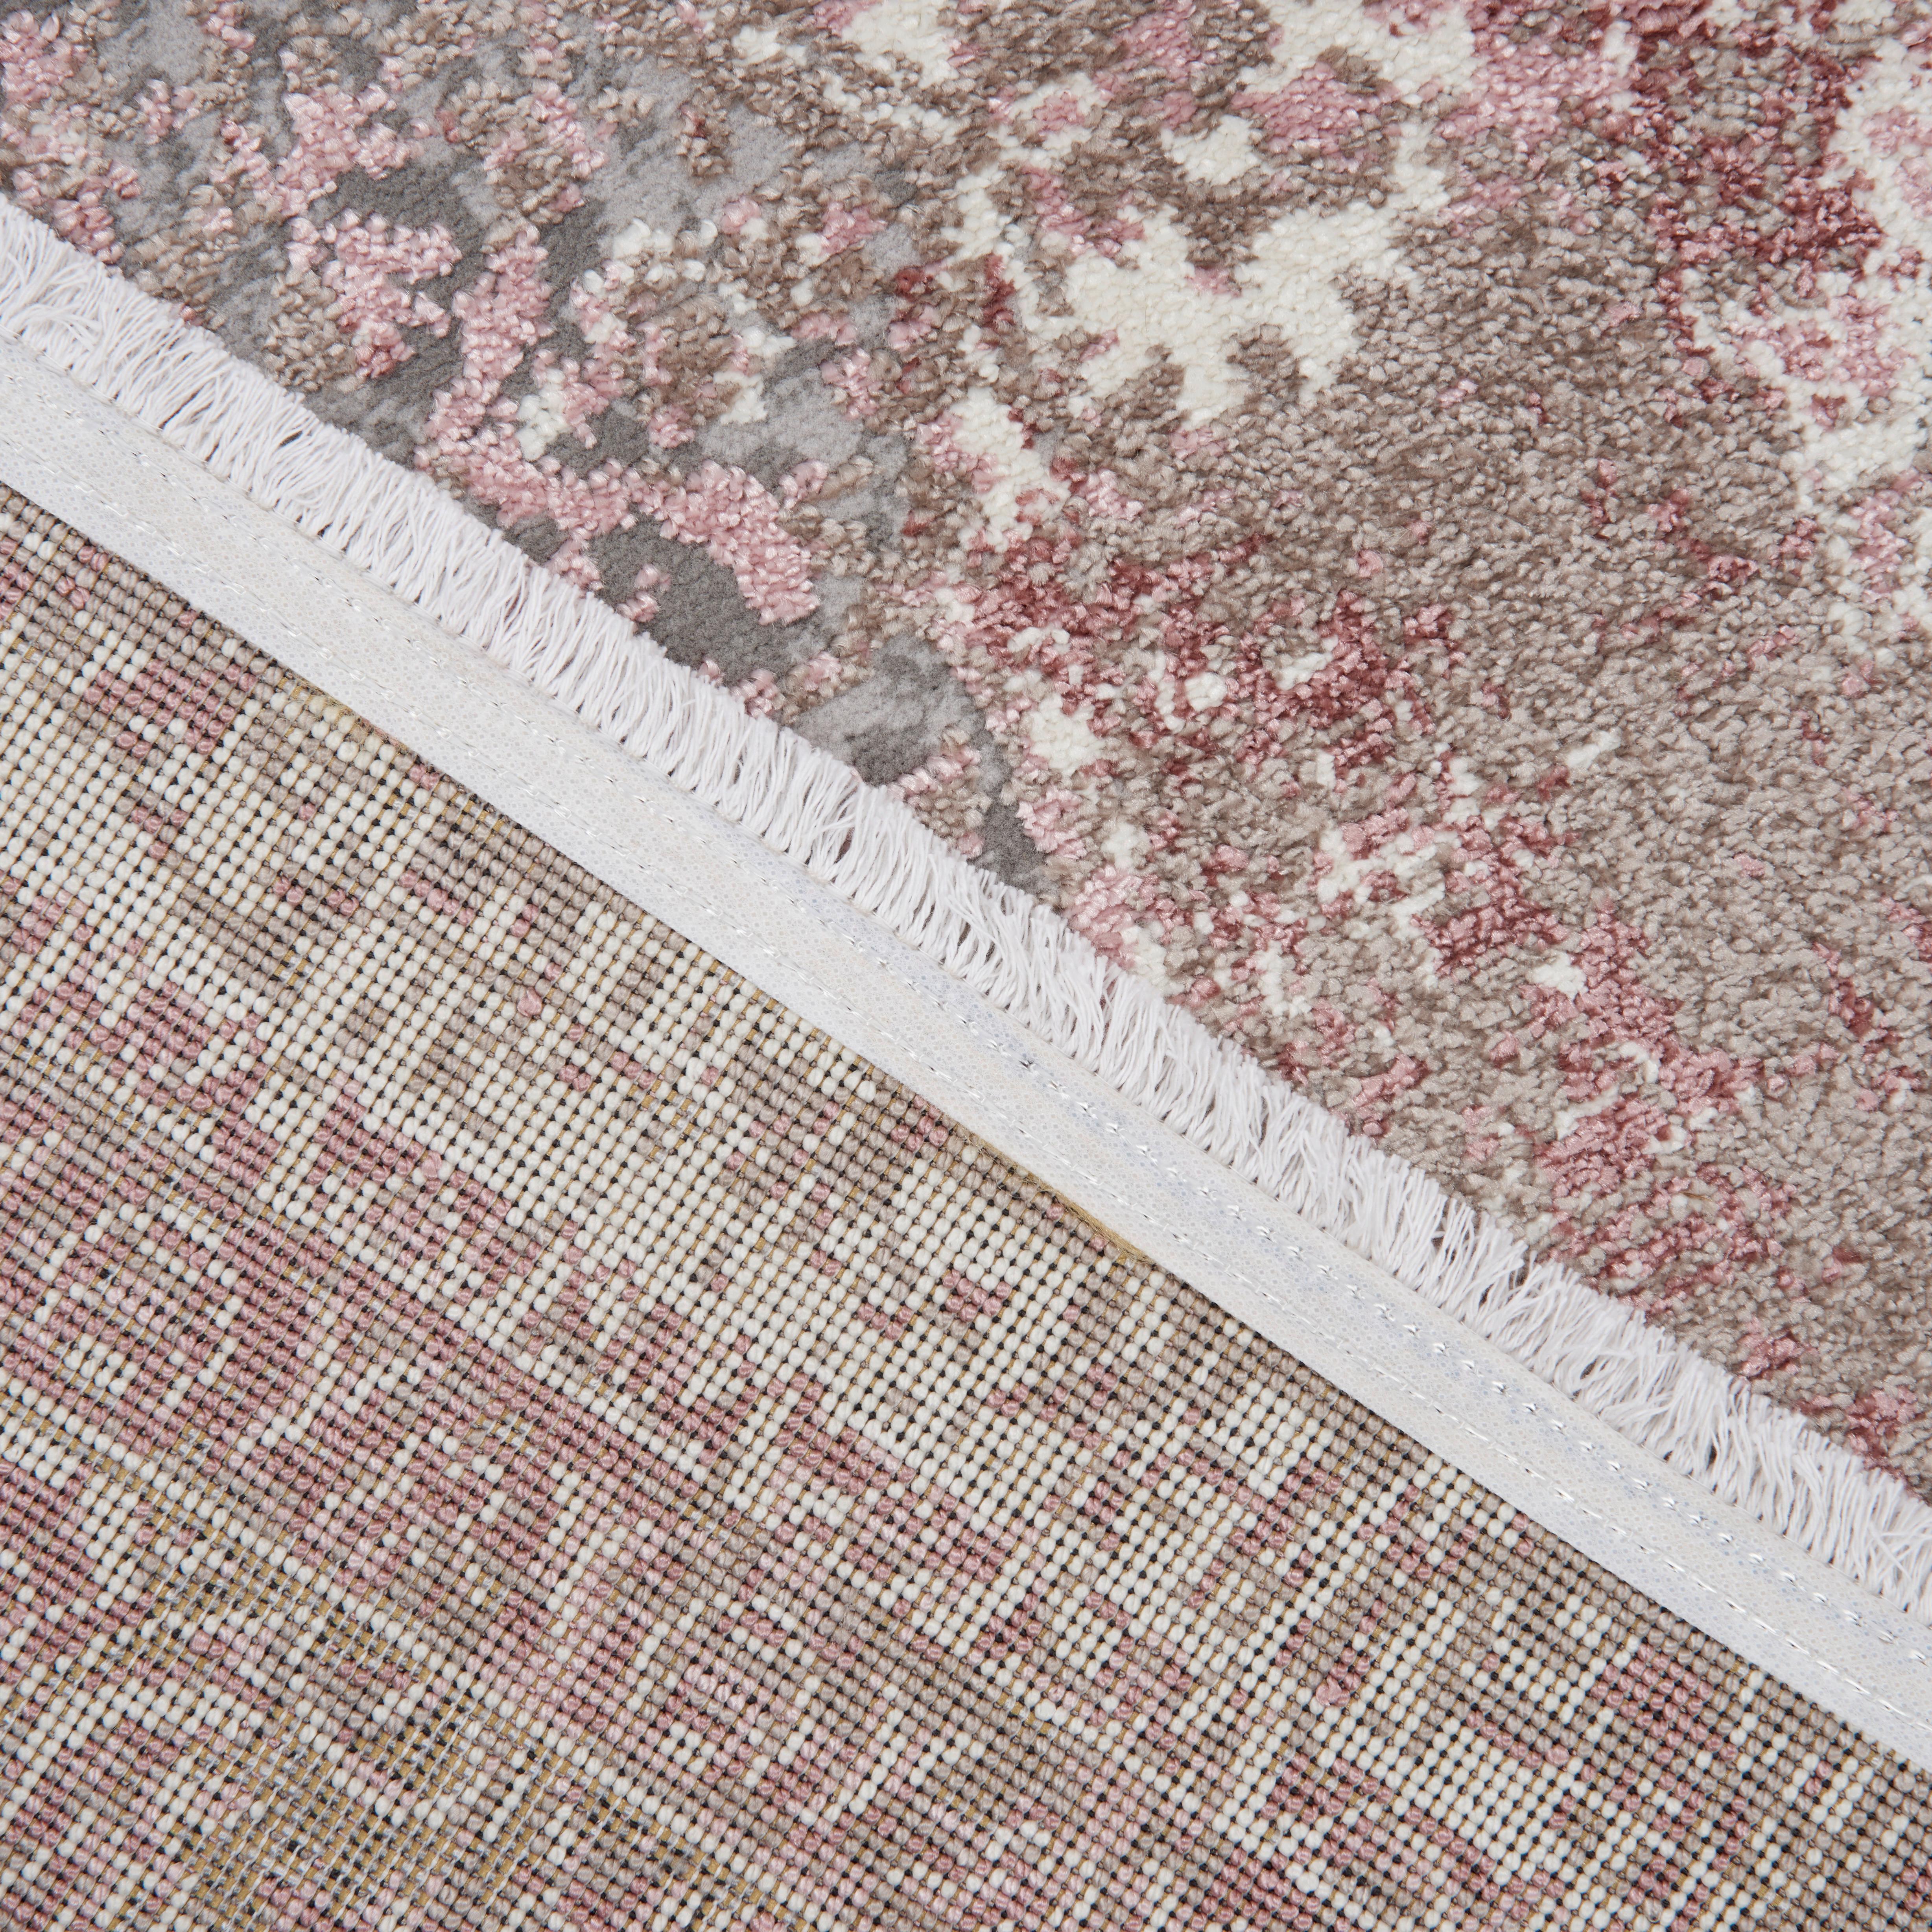 Tkaný Koberec Marcus 3, 160/230cm, Ružová - ružová, textil (160/230cm) - Modern Living